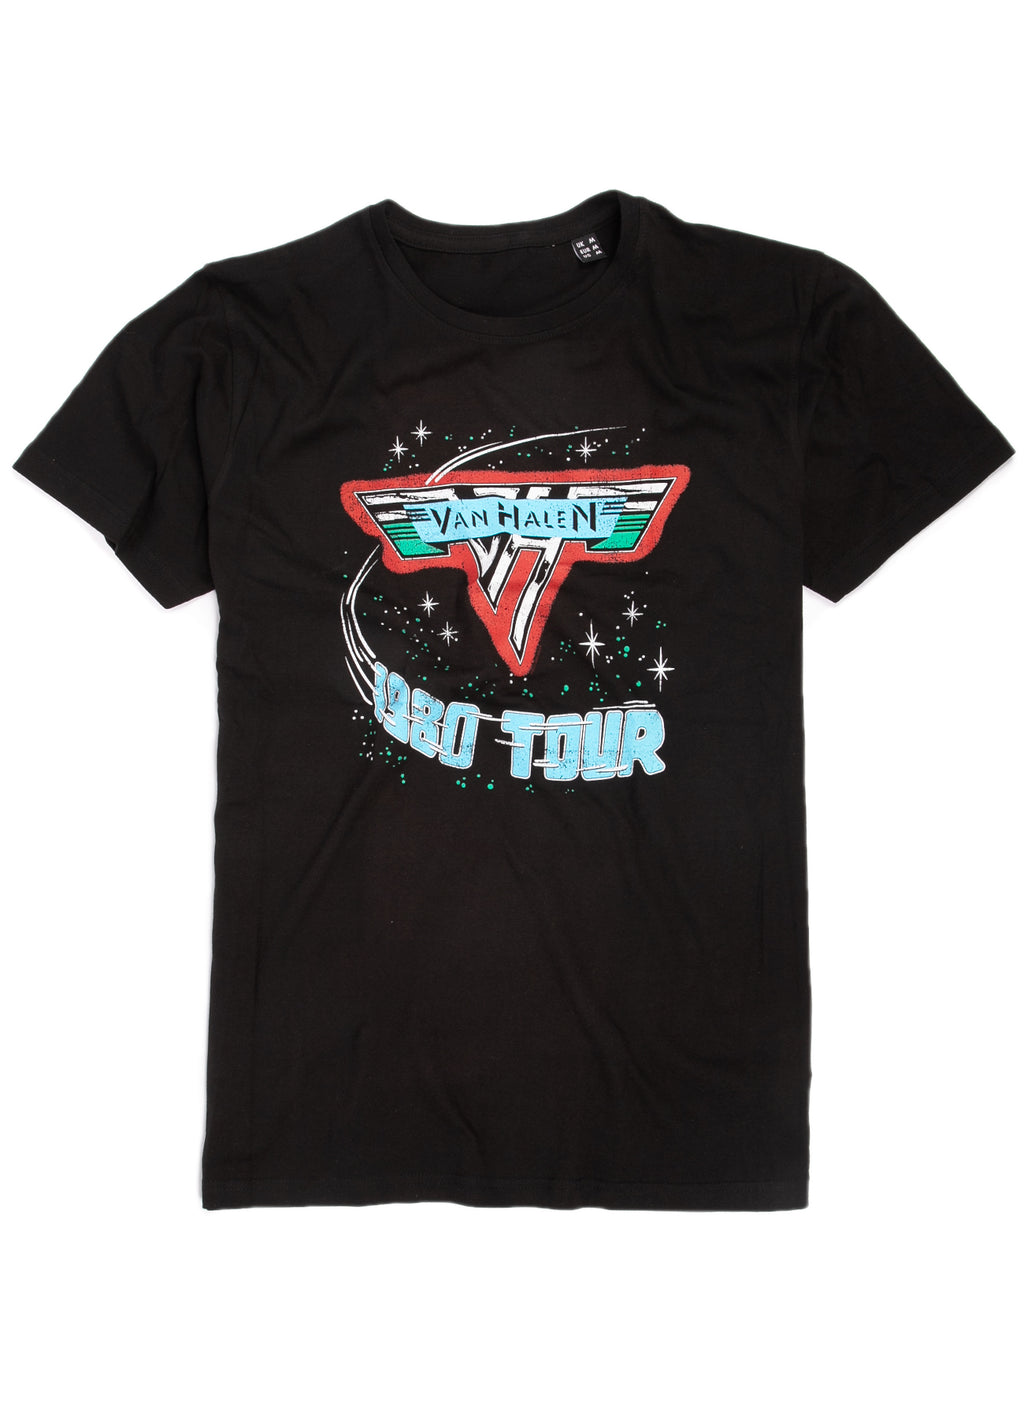 Van Halen 1980 tour t-shirt.